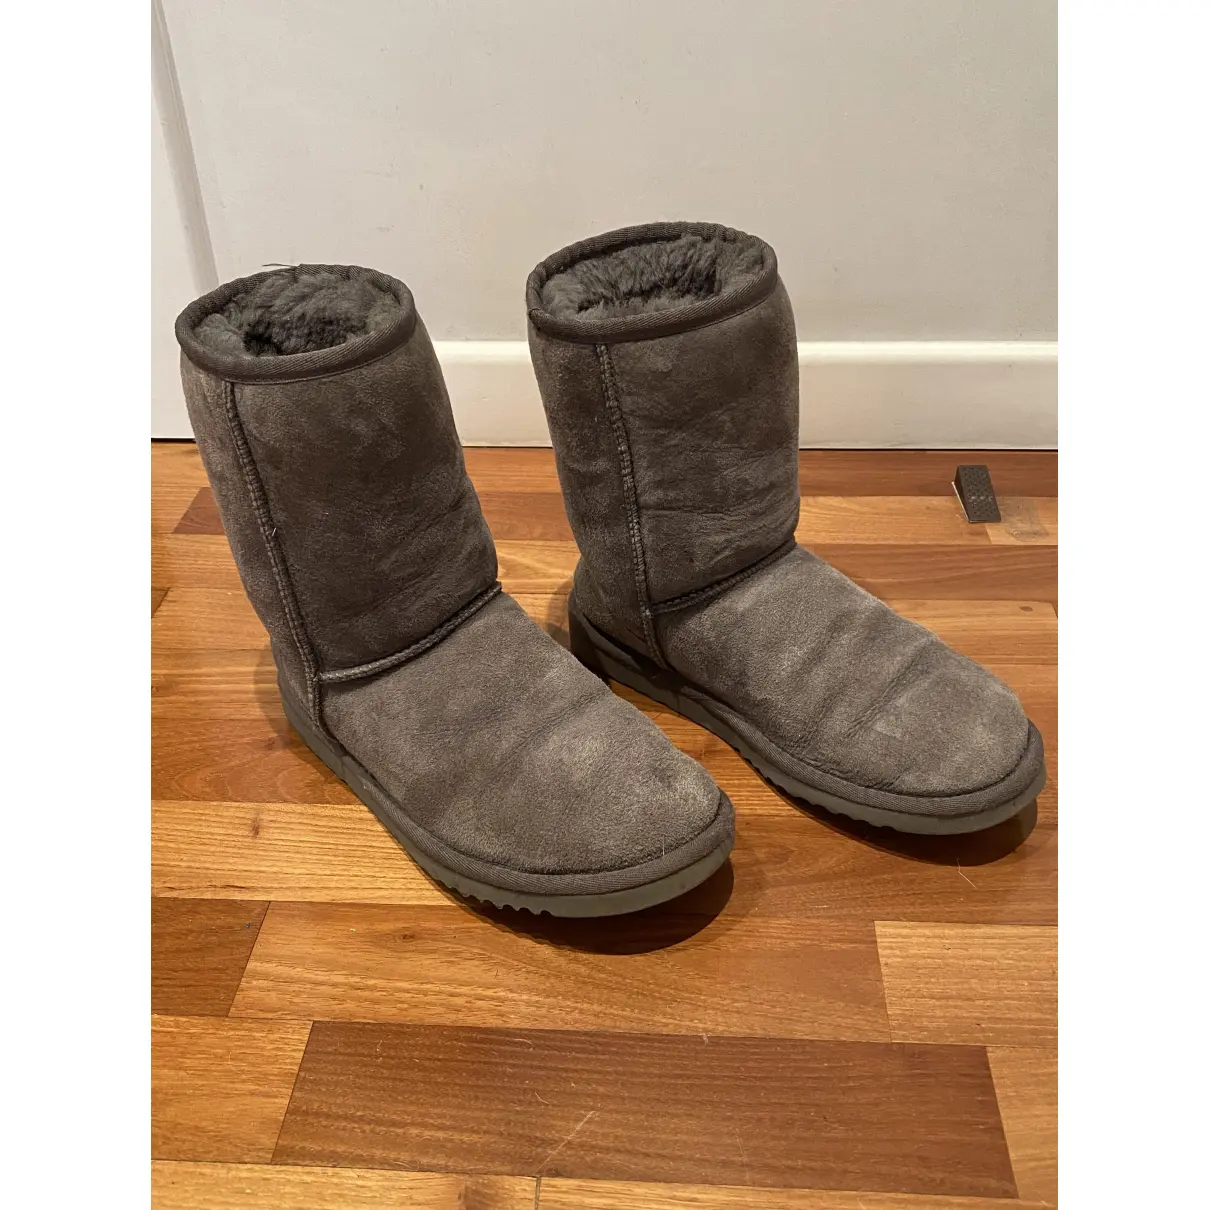 Buy Ugg Snow boots online